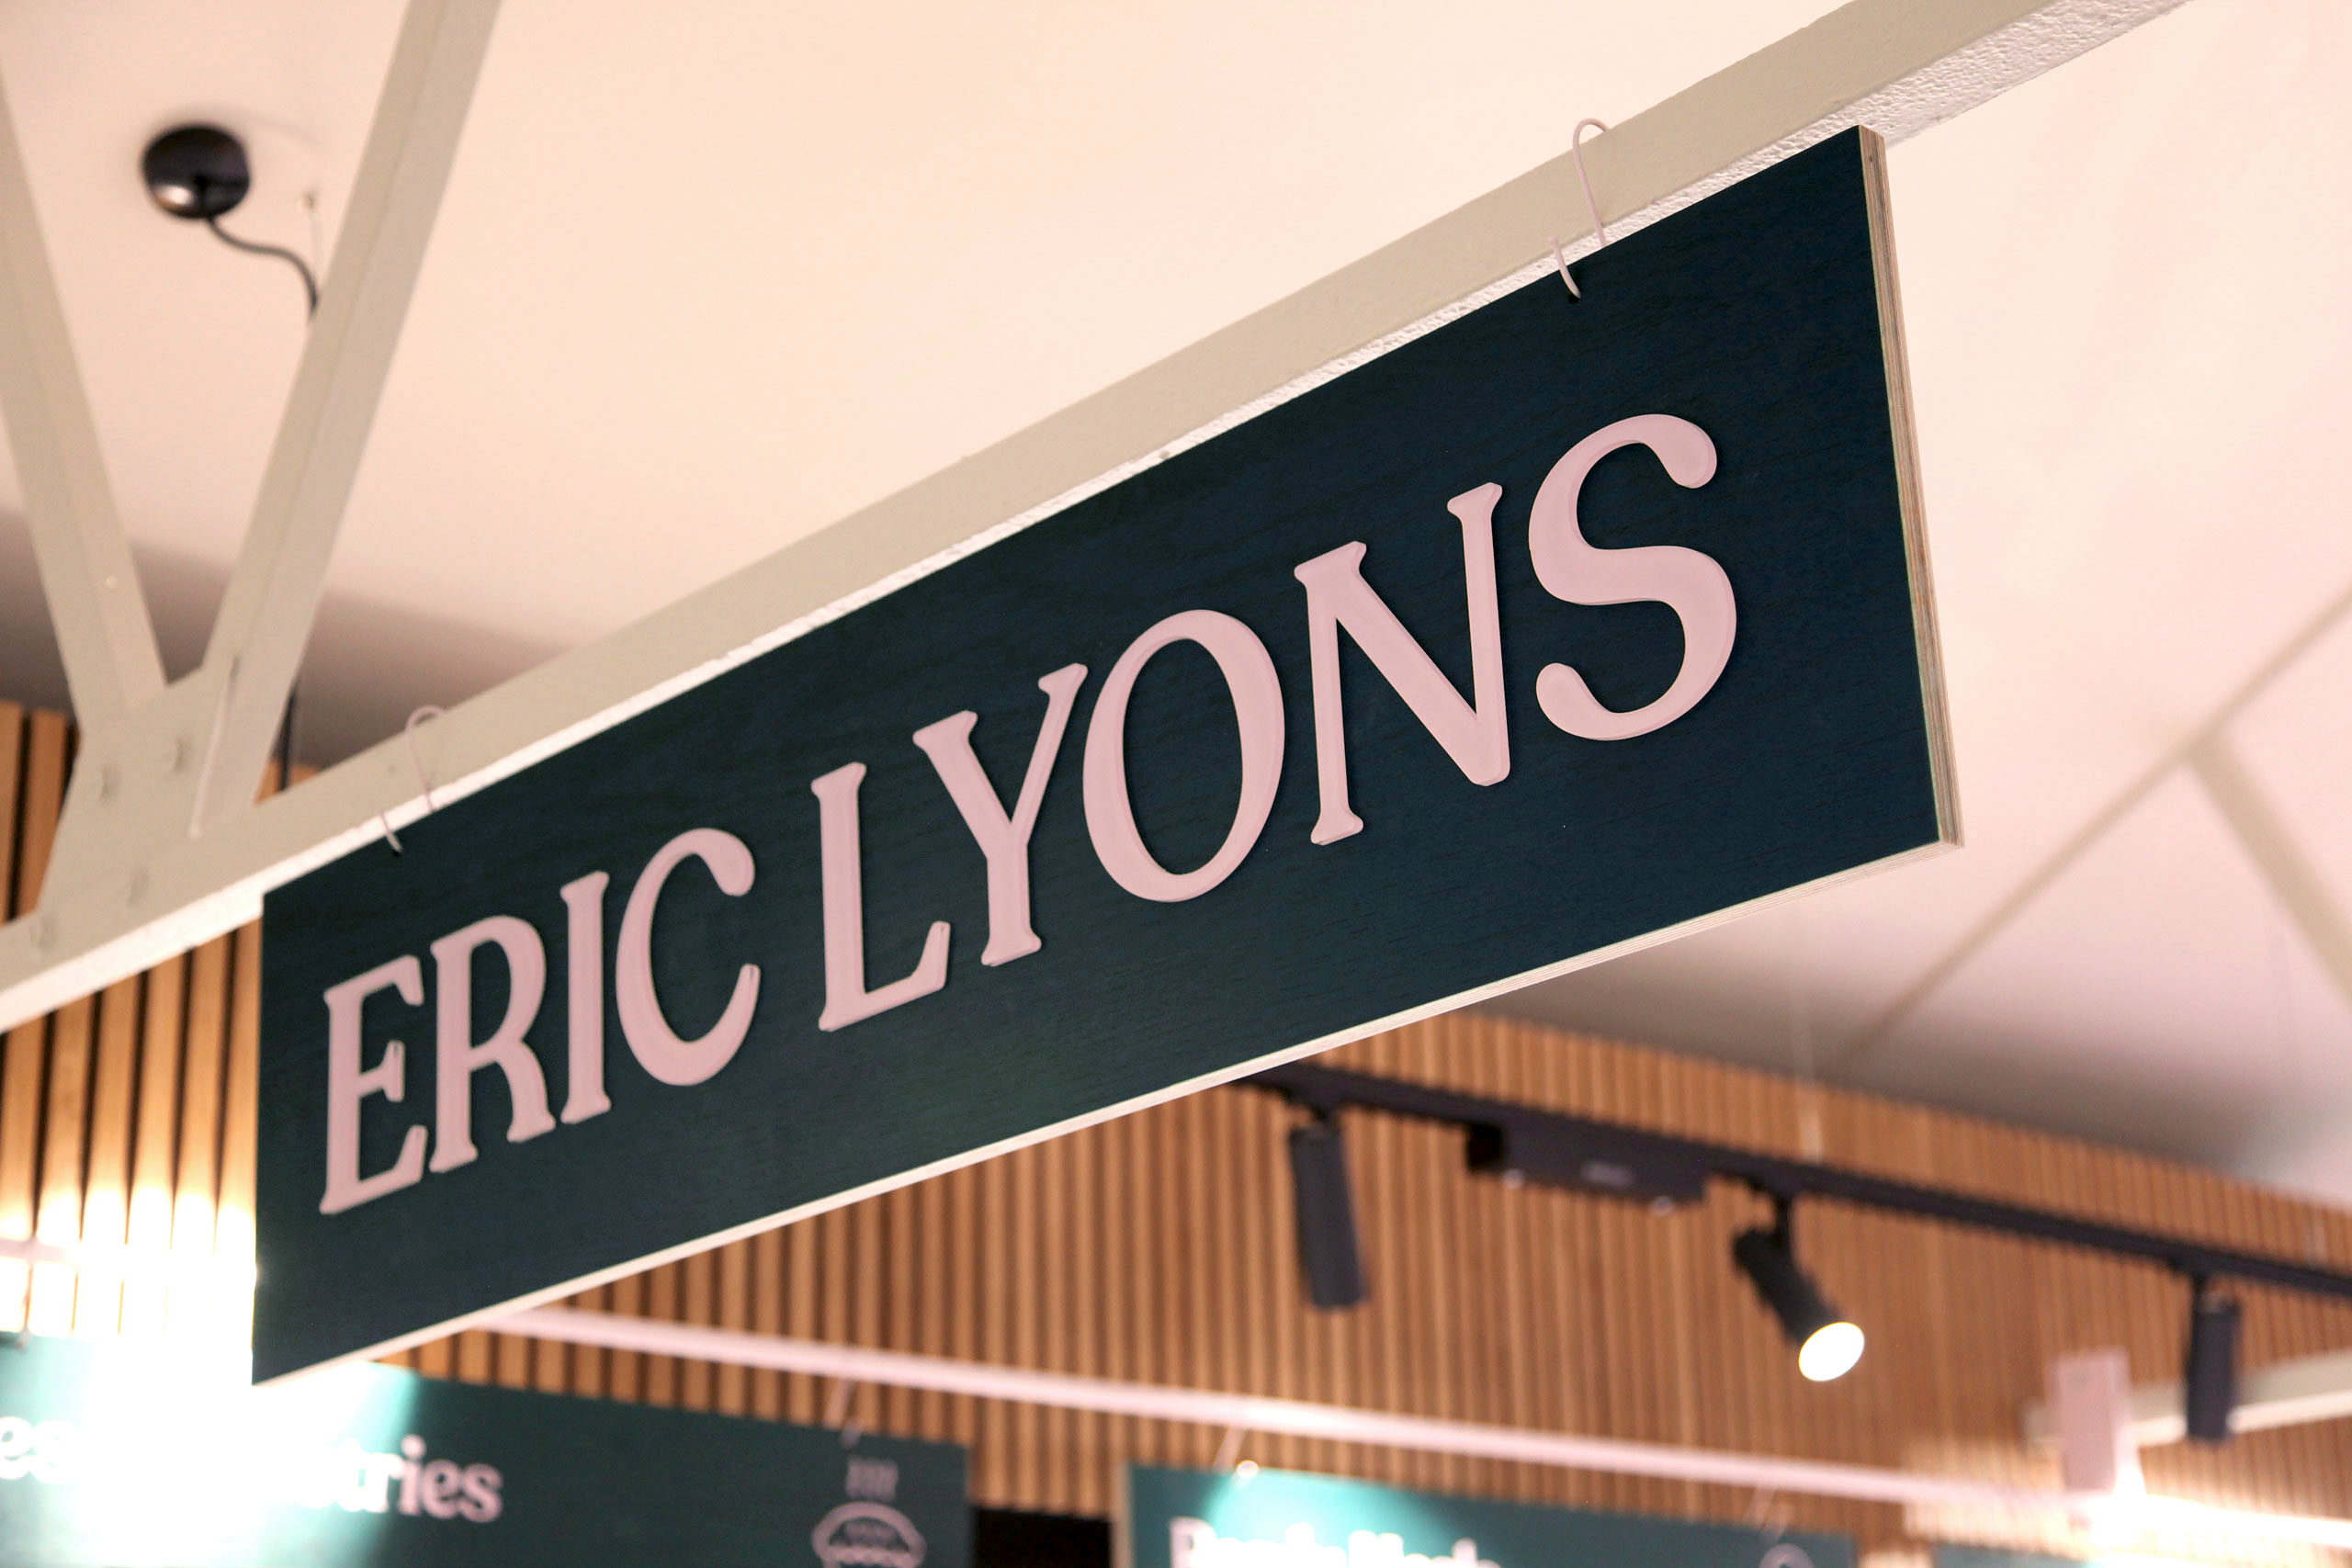 Eric-Lyons-Entrance-Sign